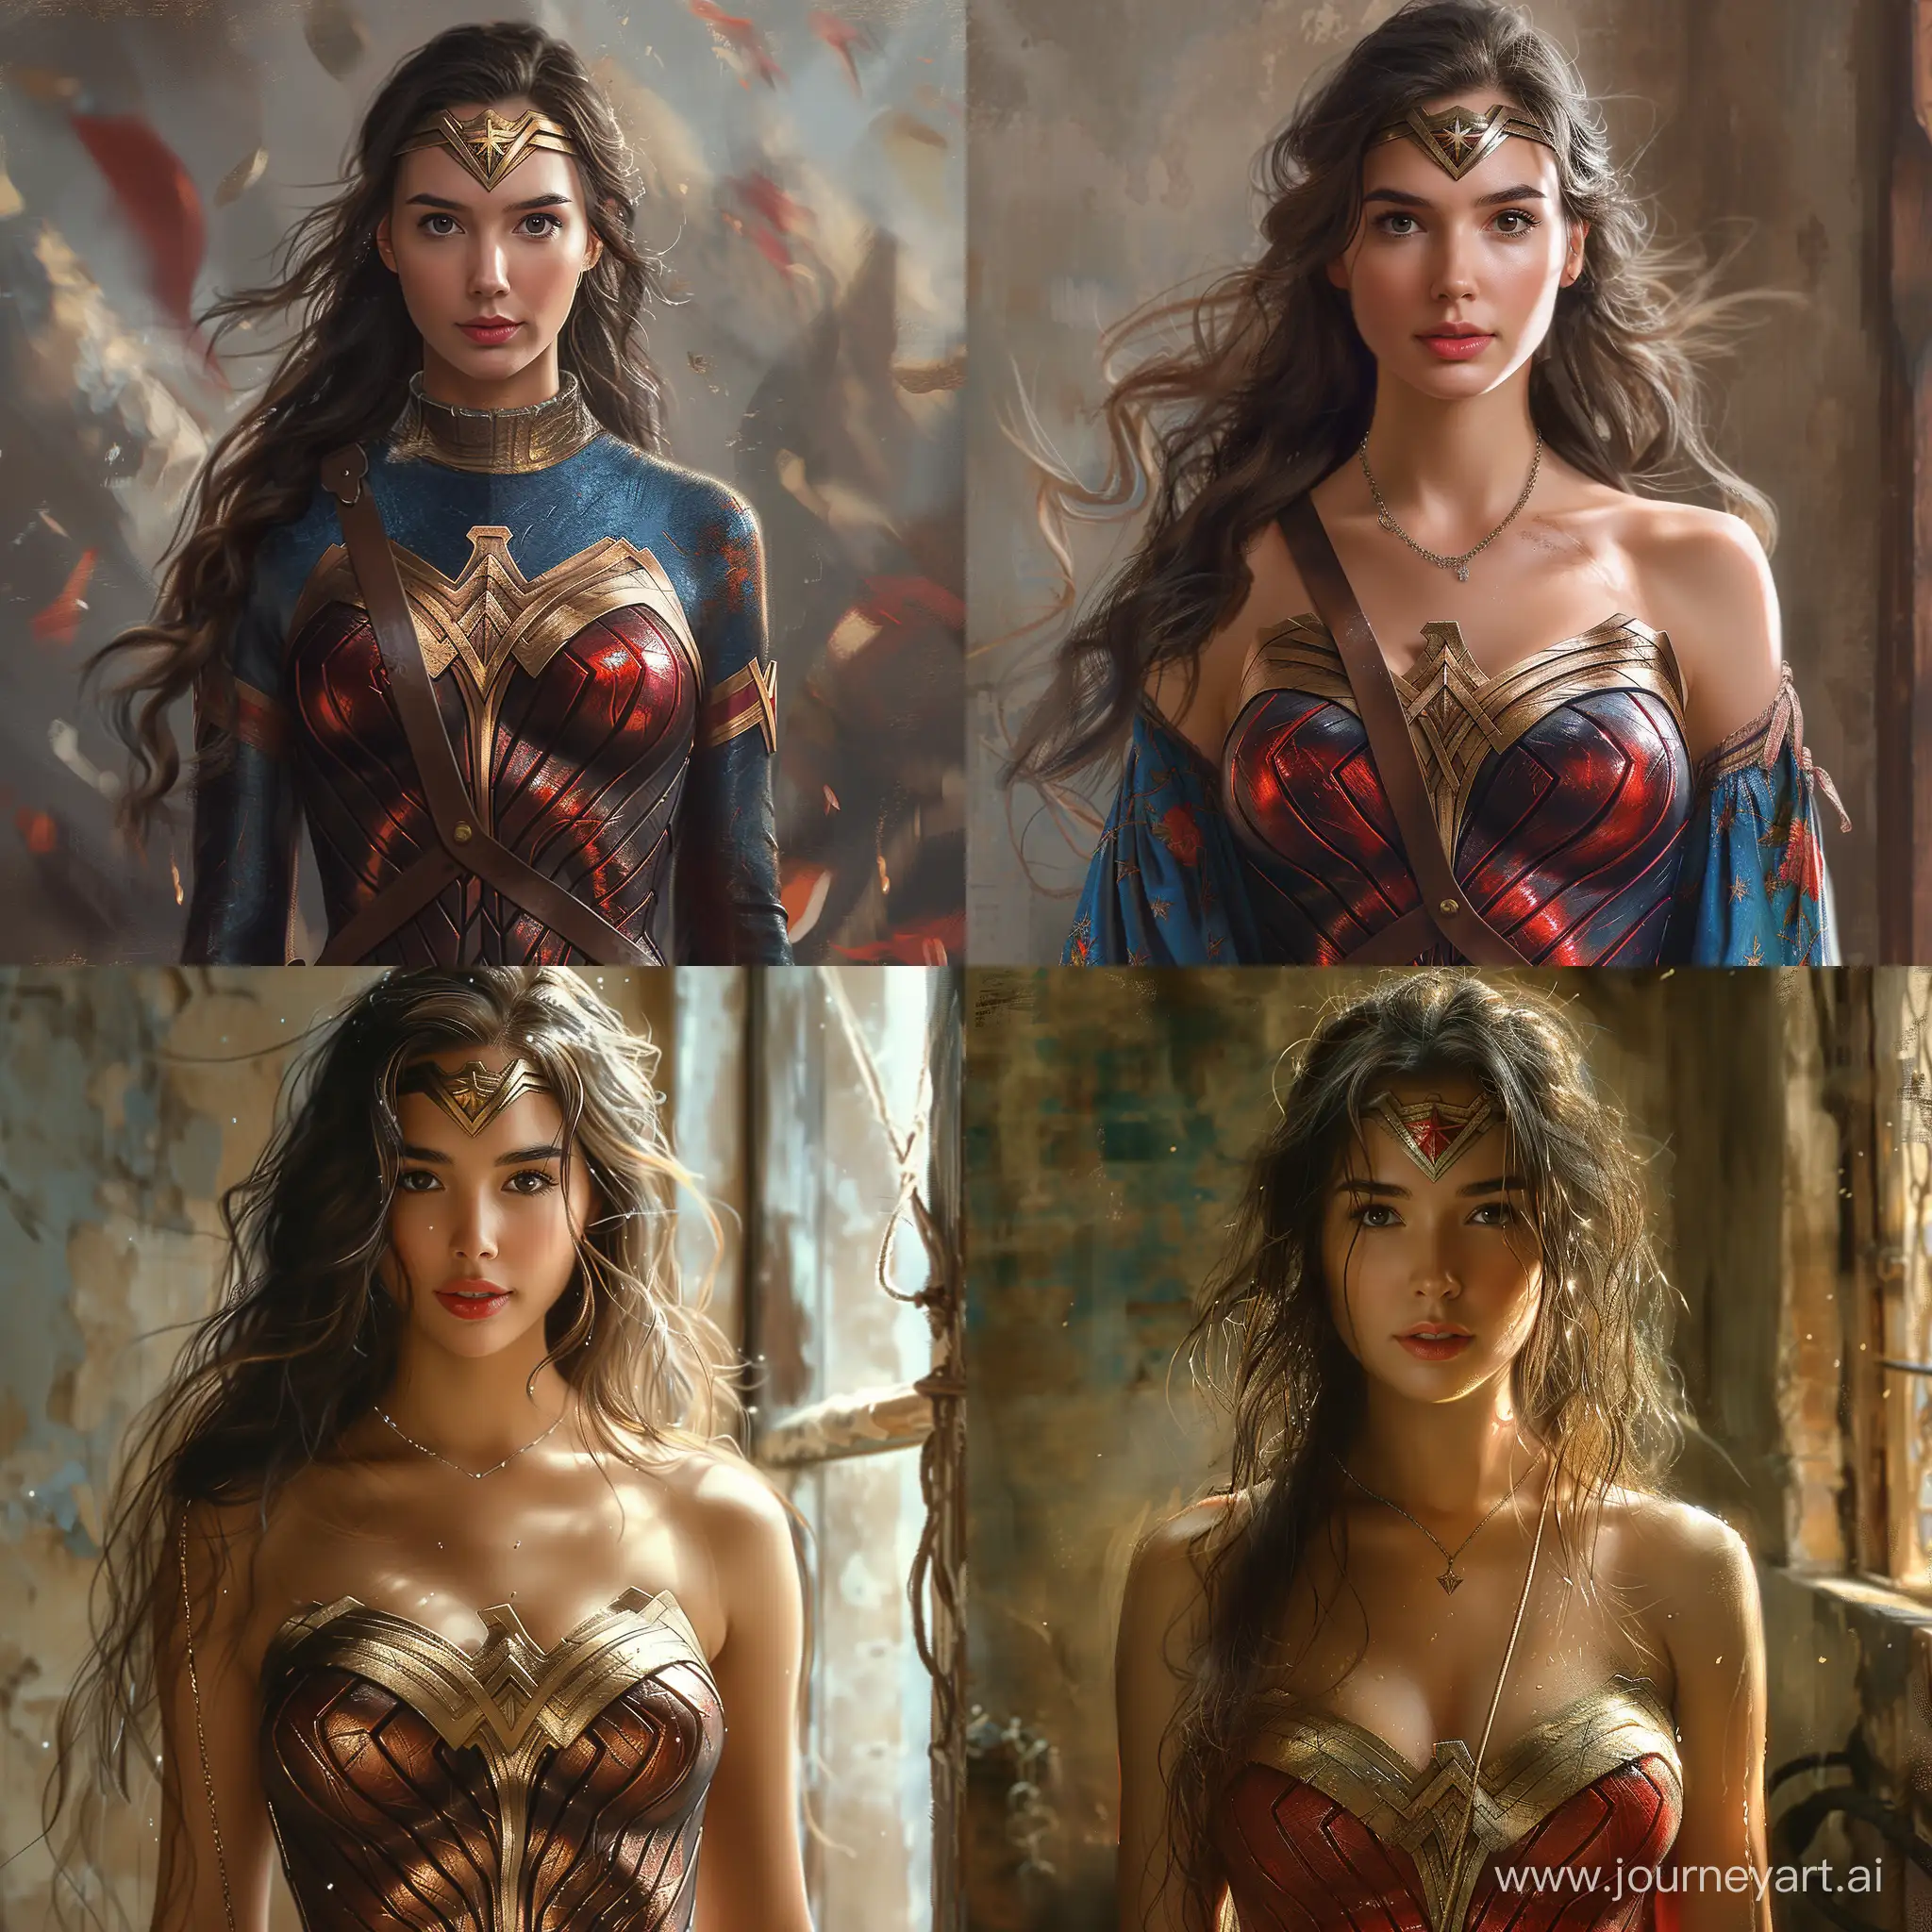 Delicate-Wonder-Woman-Dressup-Portrait-Asian-Actress-Bust-with-Realistic-Details